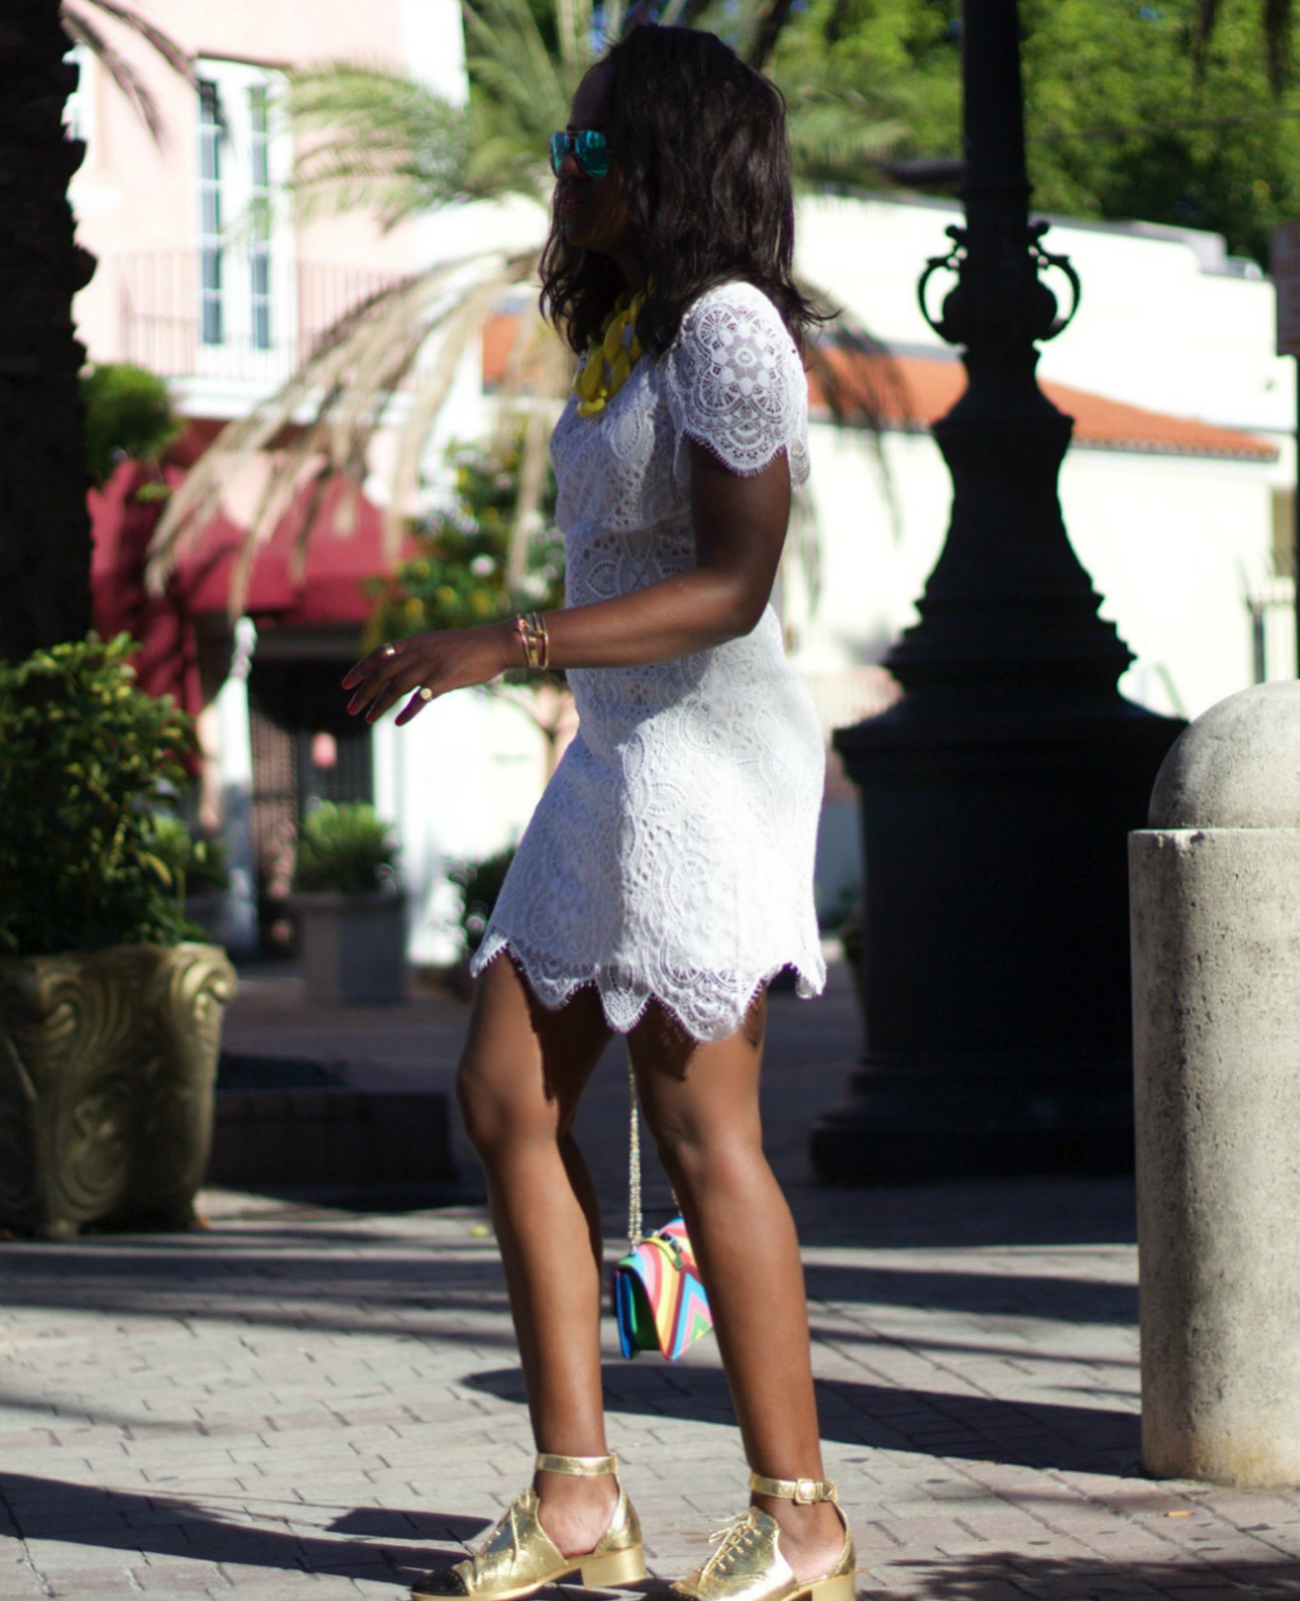 white Lace Dress